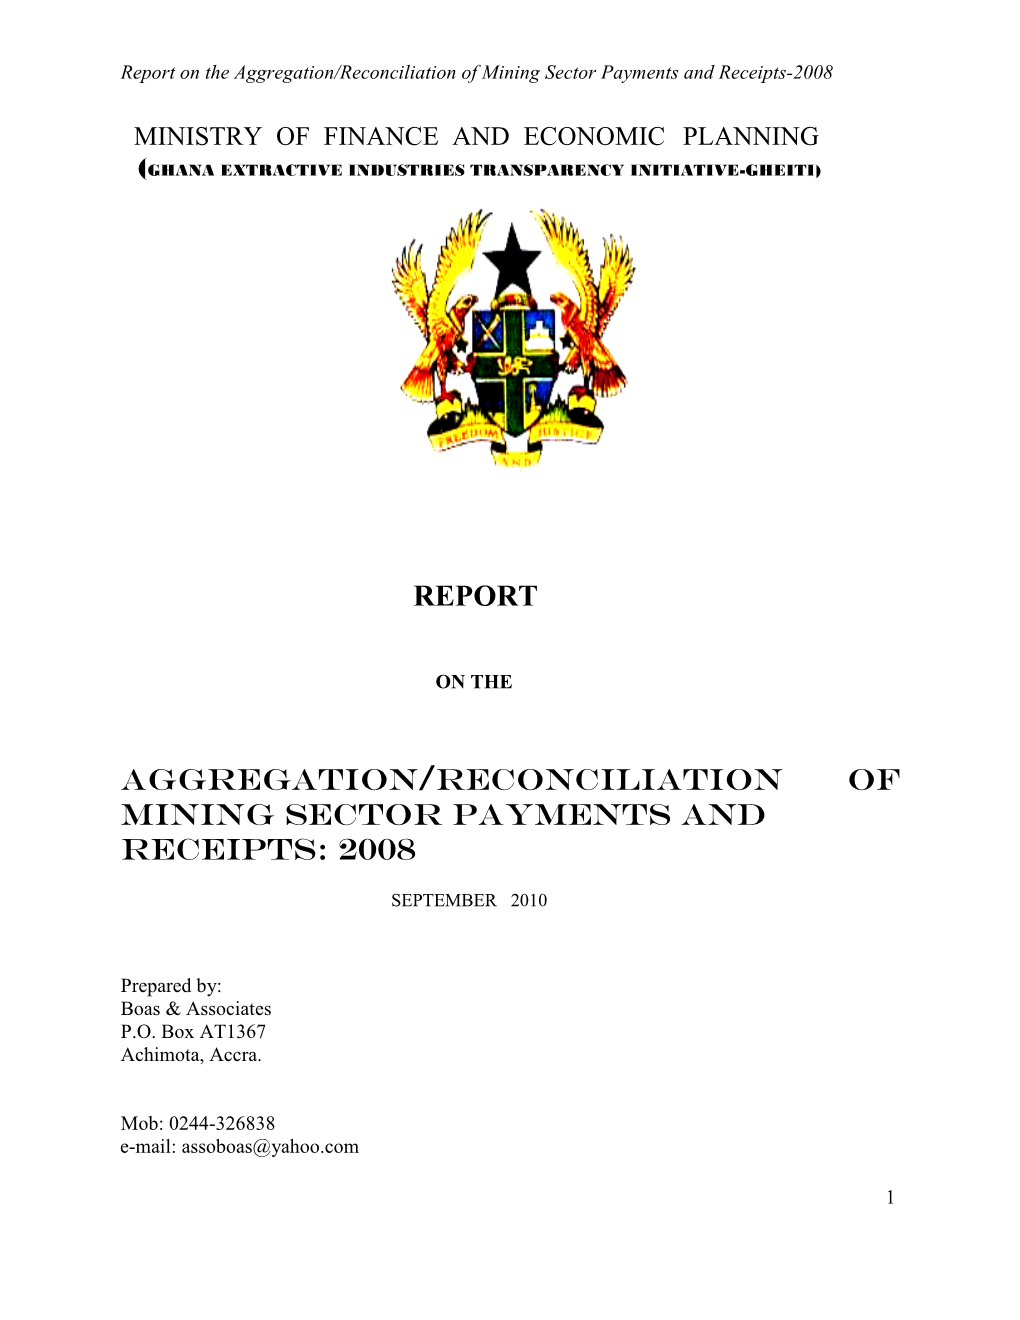 Report Aggregation/Reconciliation